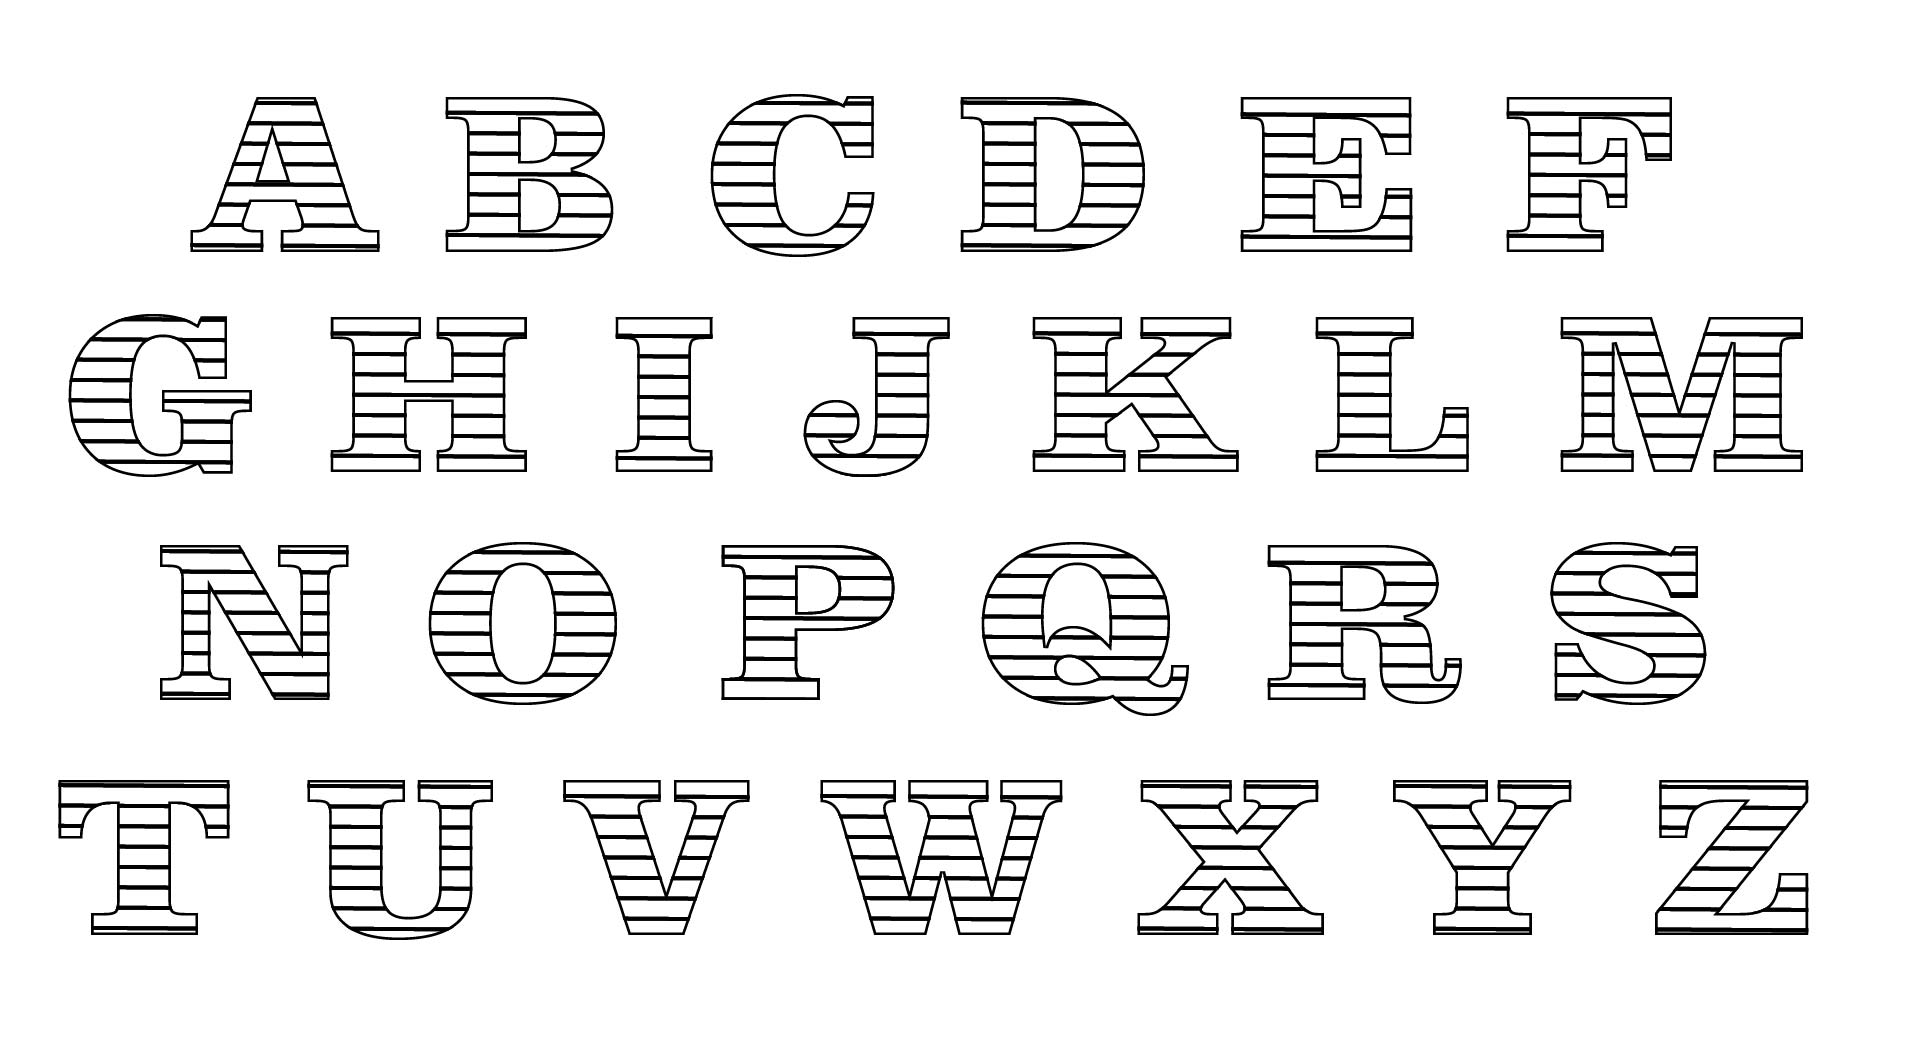 4 Best Images Of Printable Alphabet Block Letter Large Size Large Printable Letter Stencils 